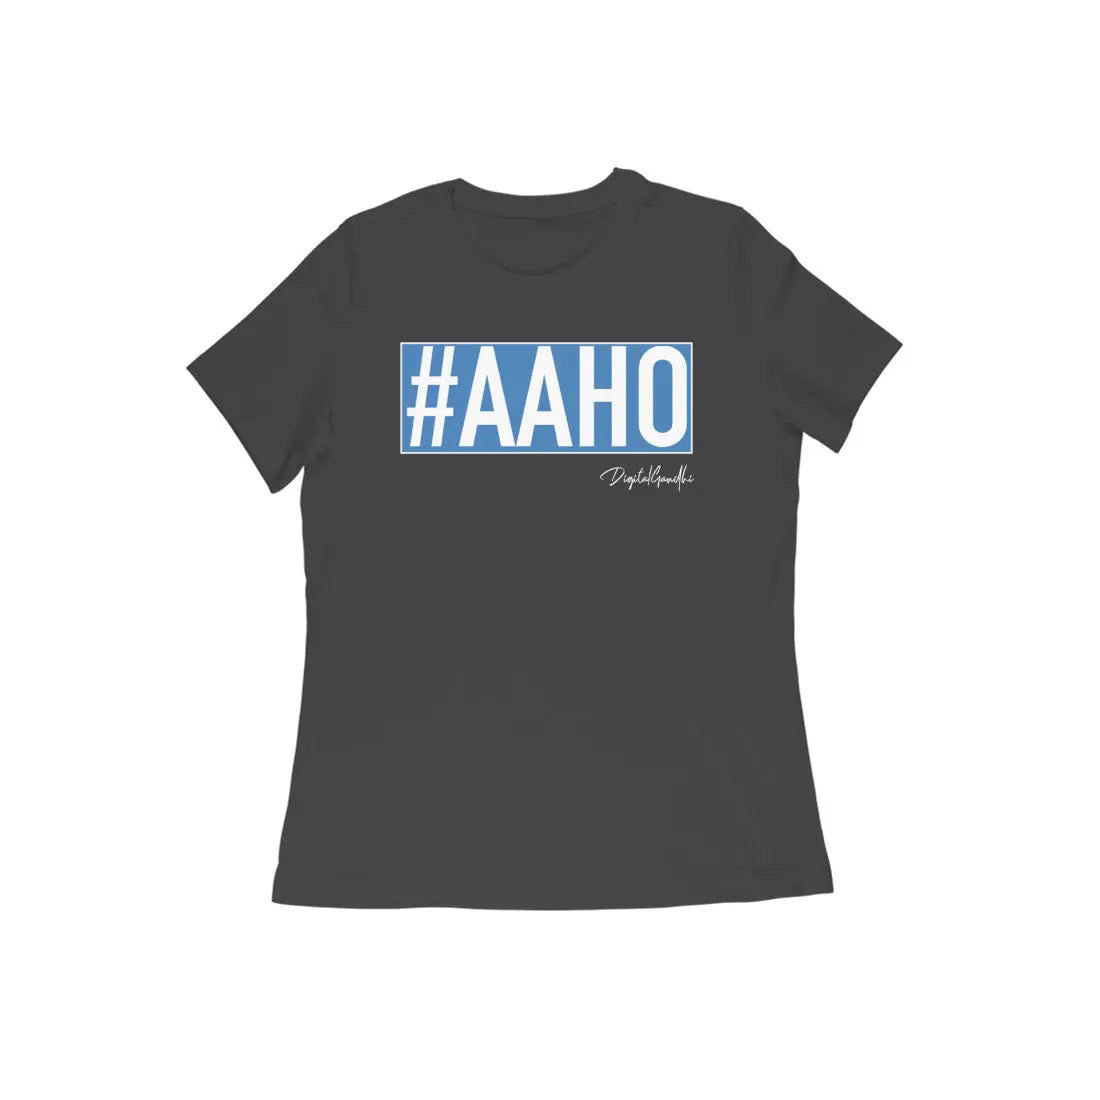 AAHO Tee shirt / Digital gandhi Printrove